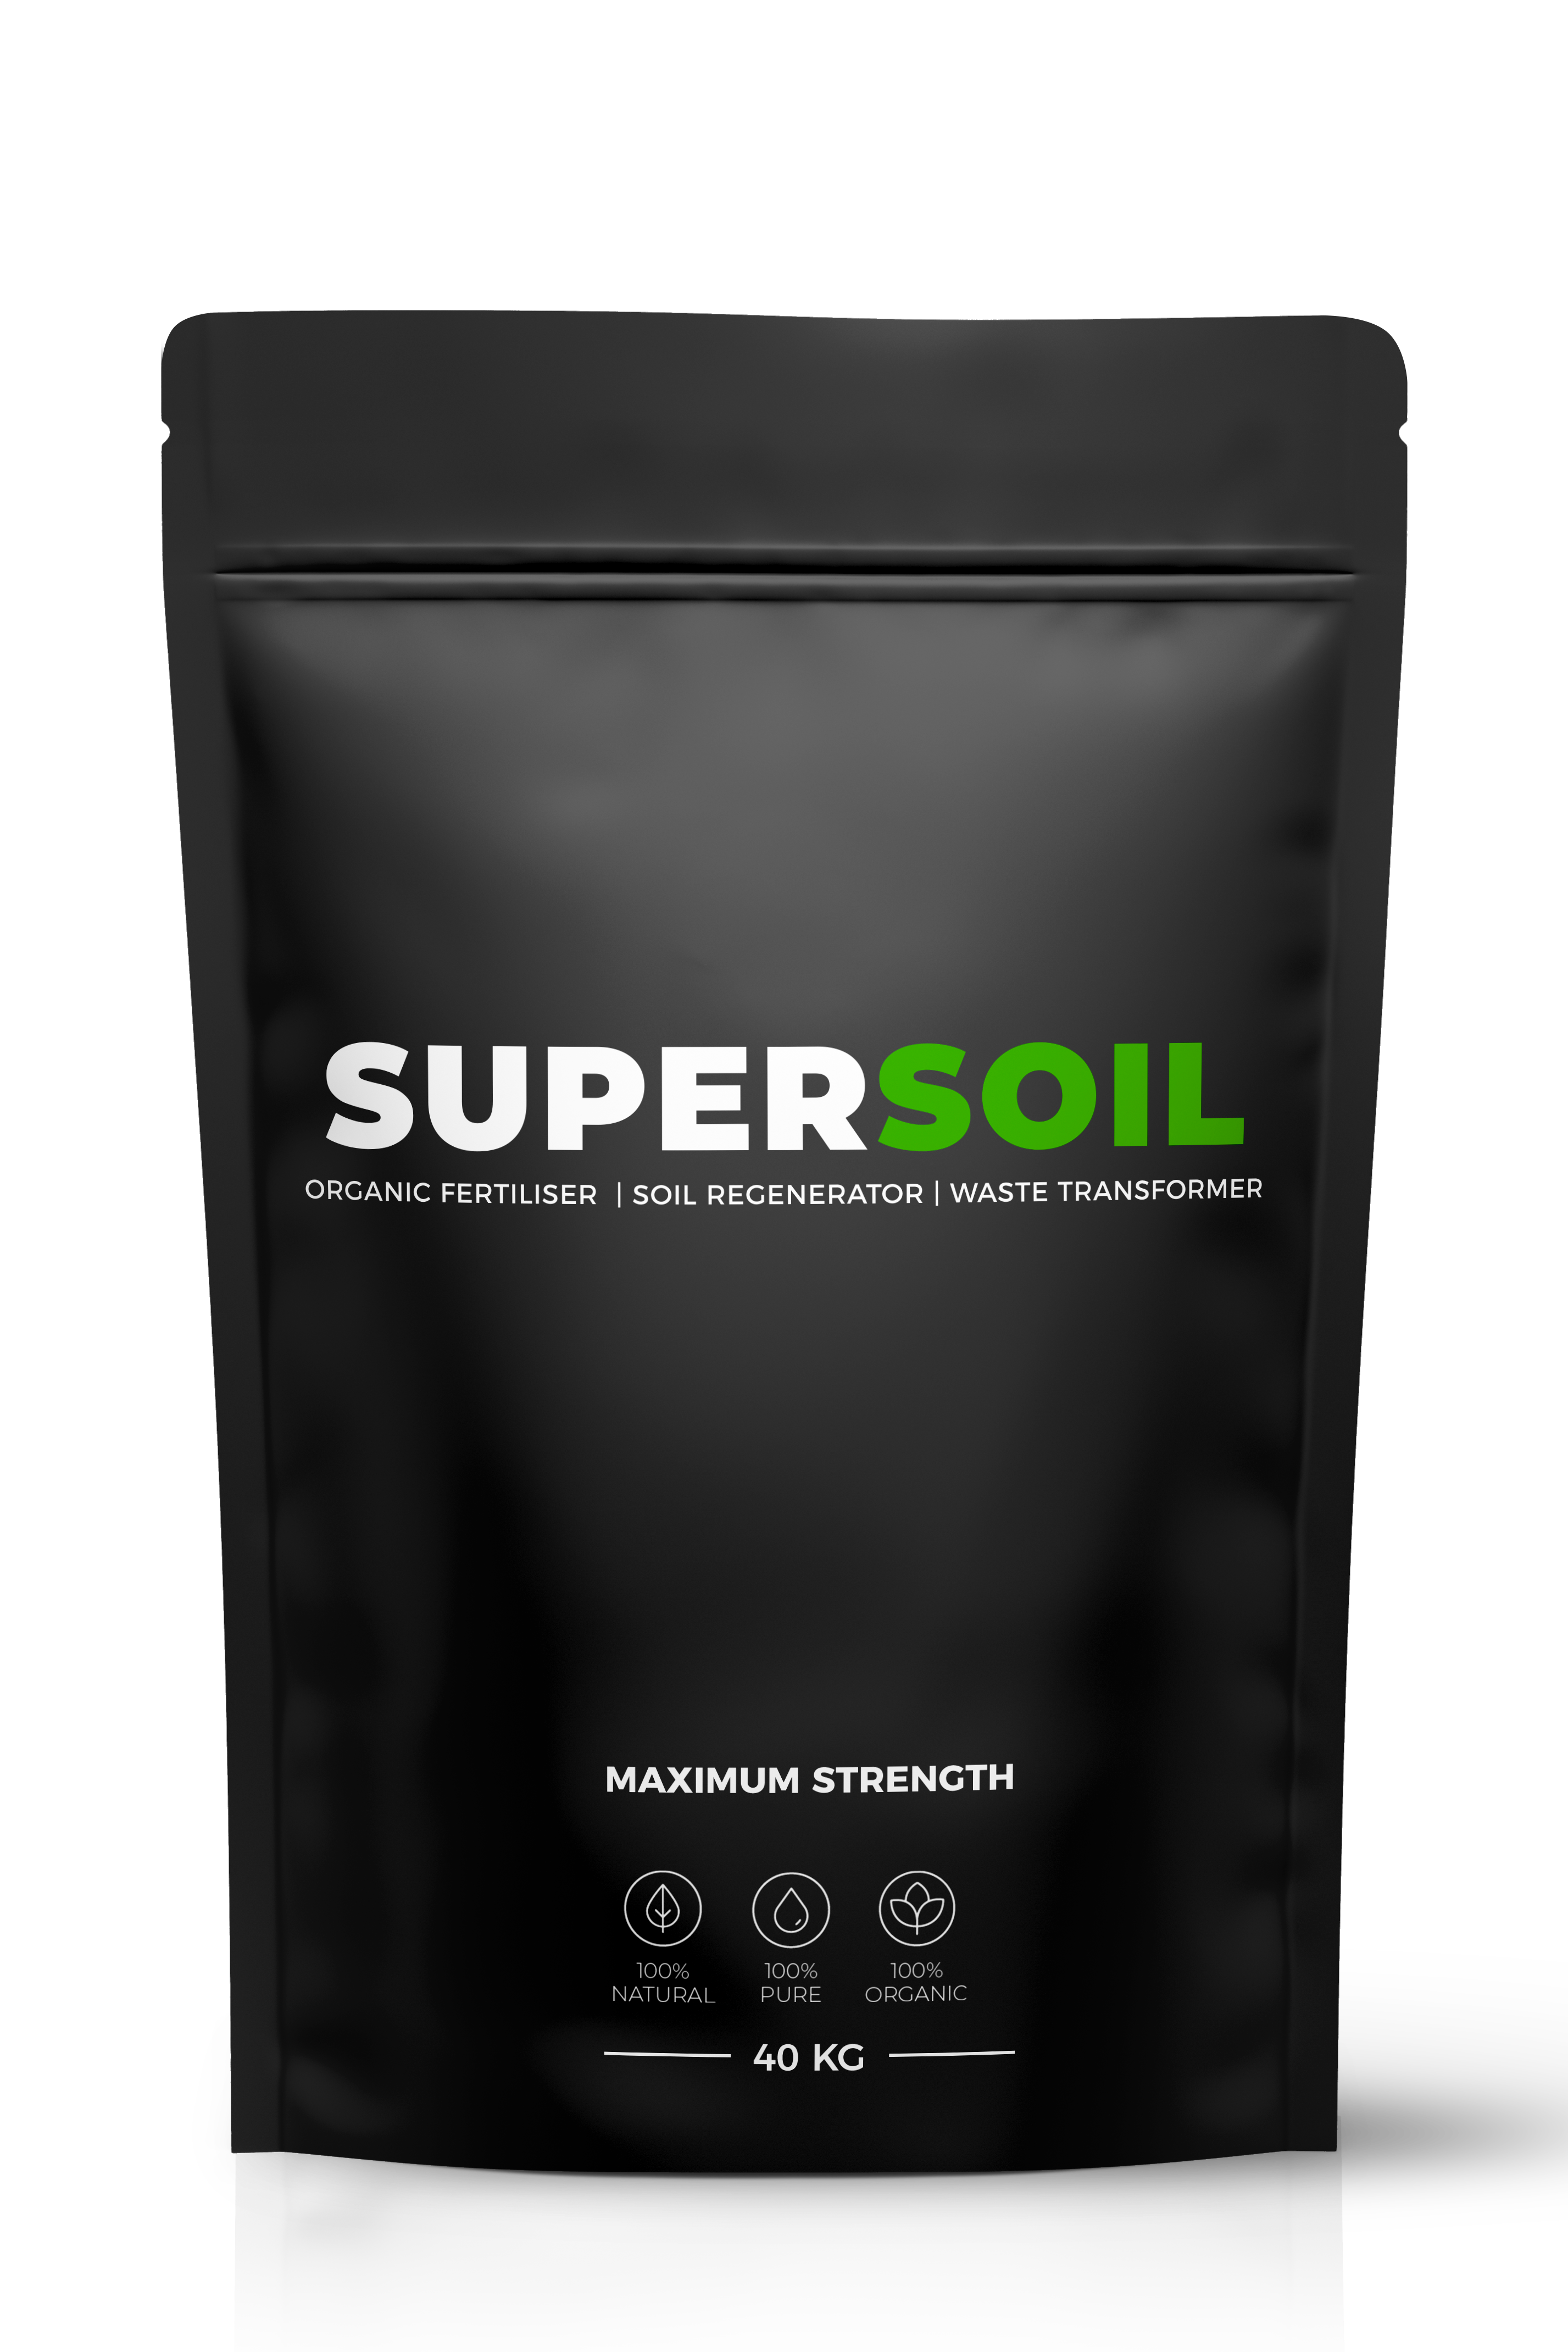 Supersoil Max Strength 40KG - Black Friday